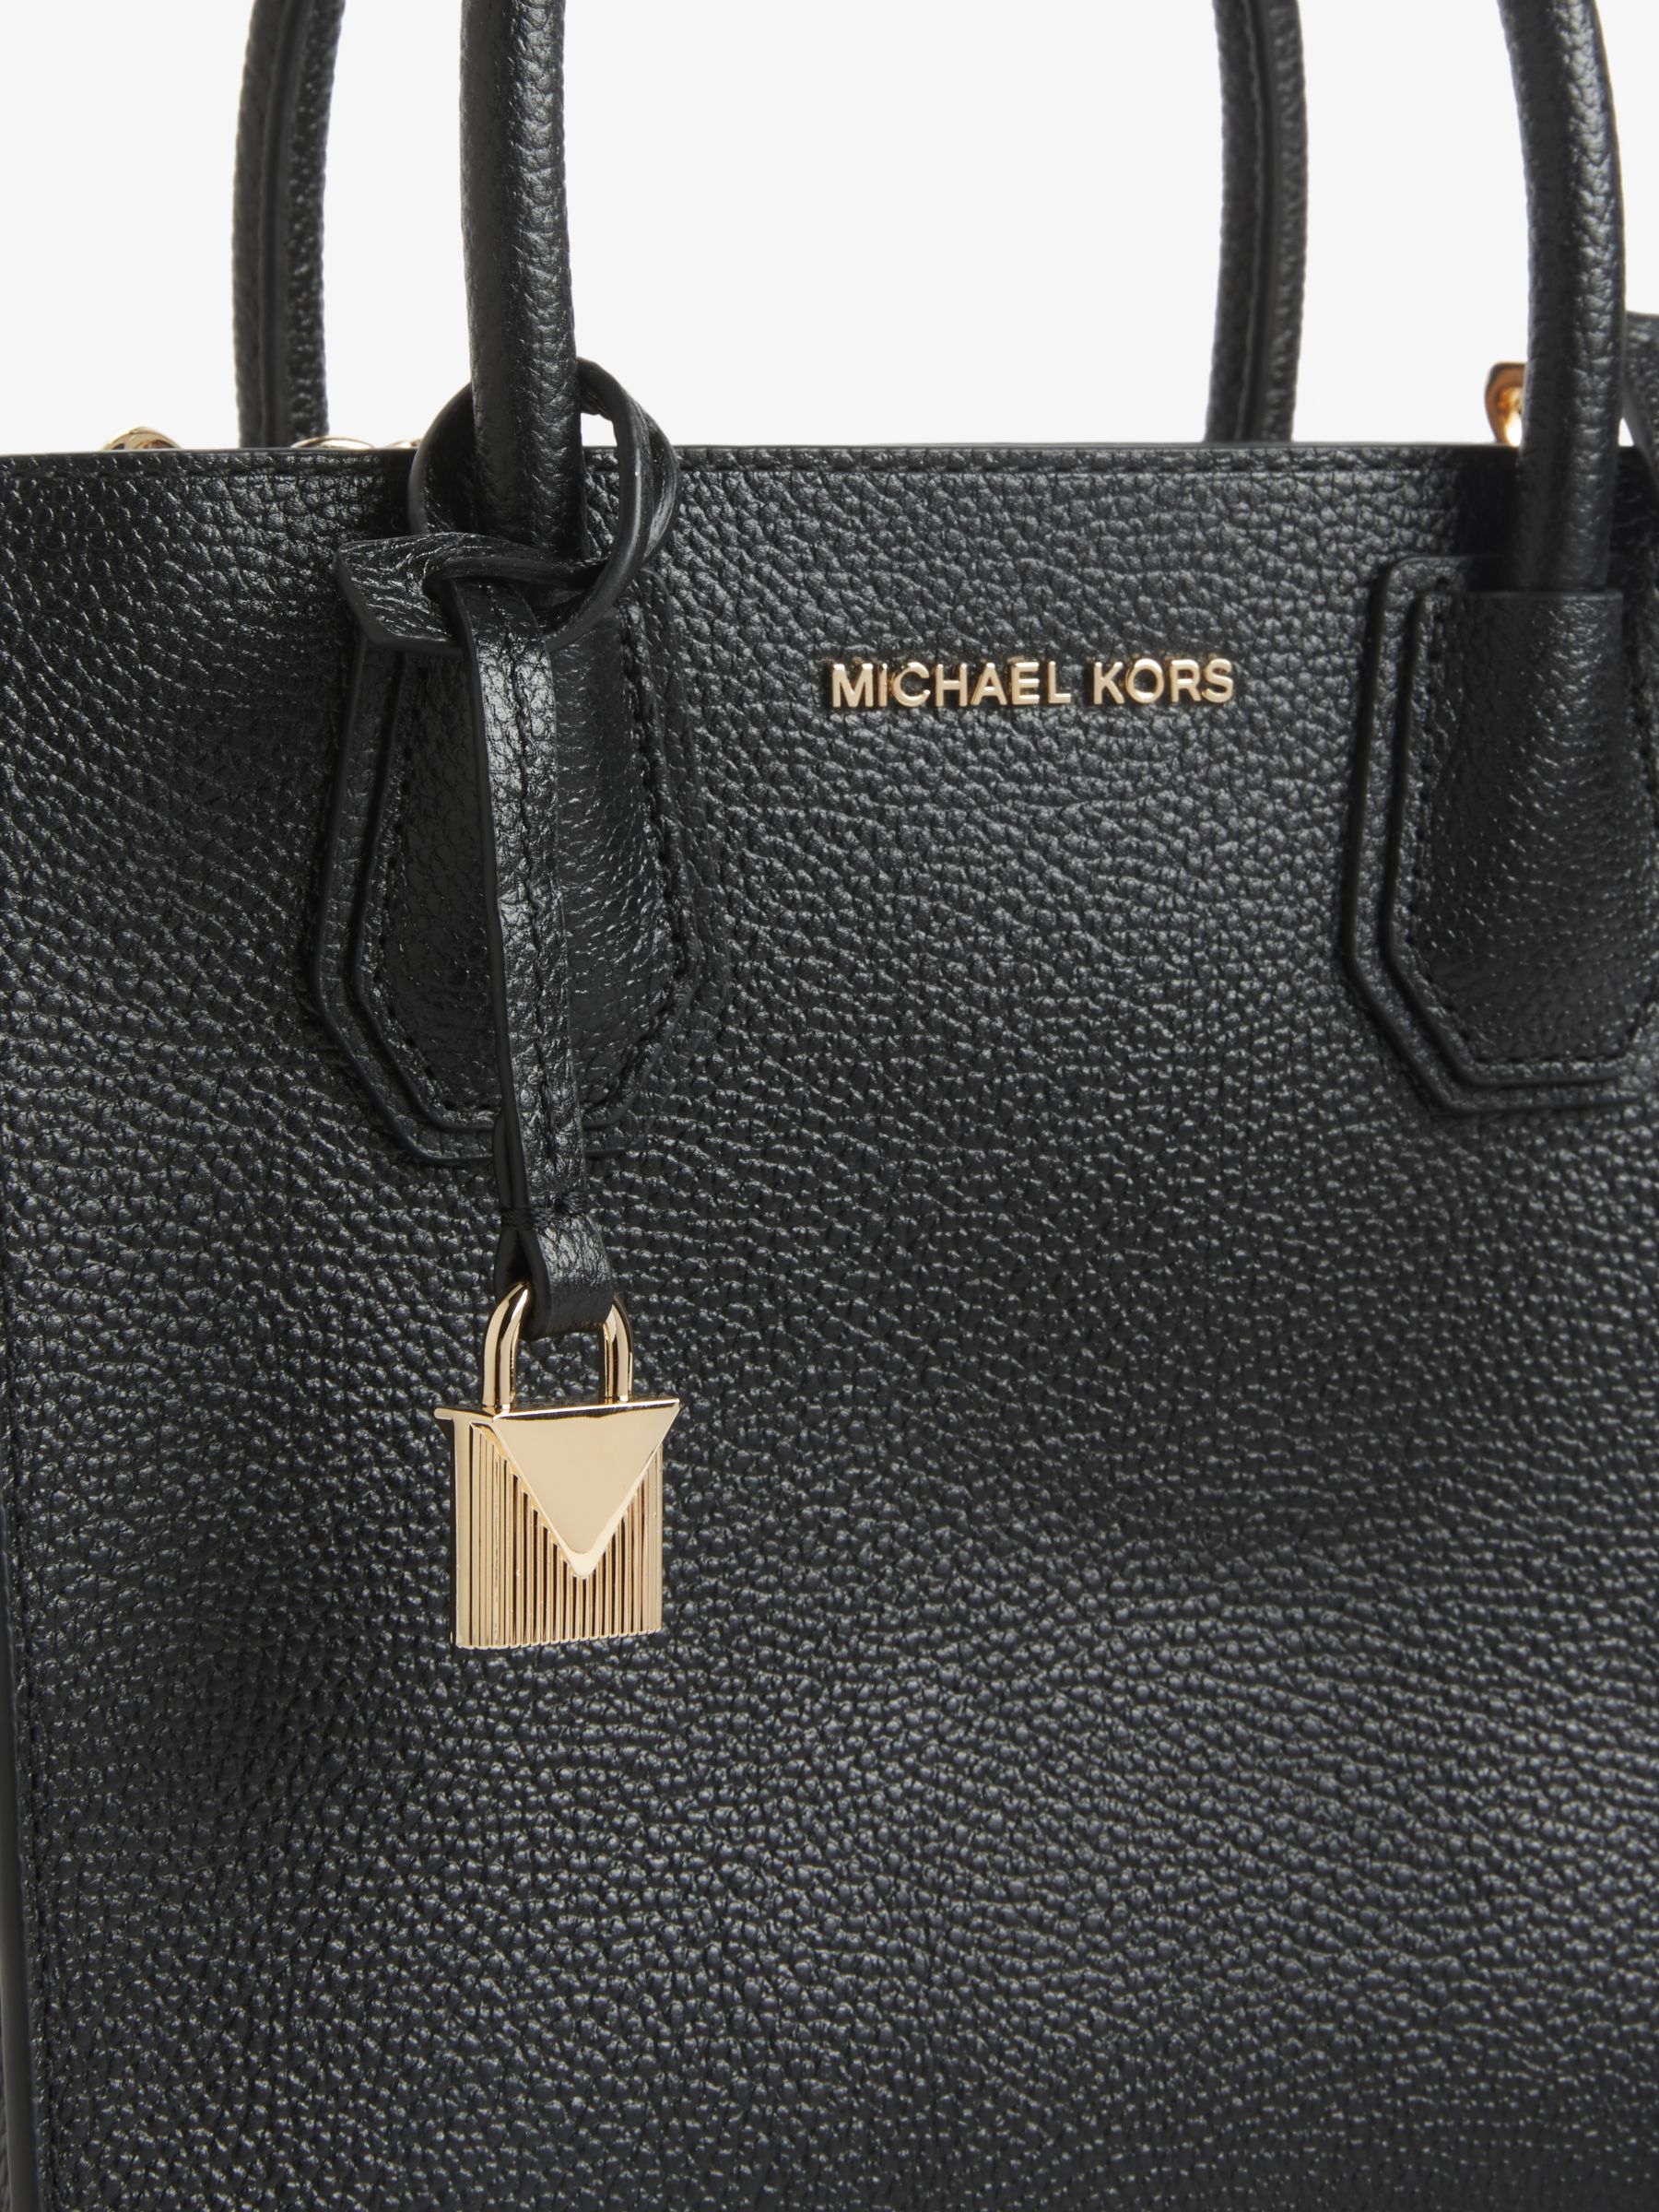 black michael kors purse with lock